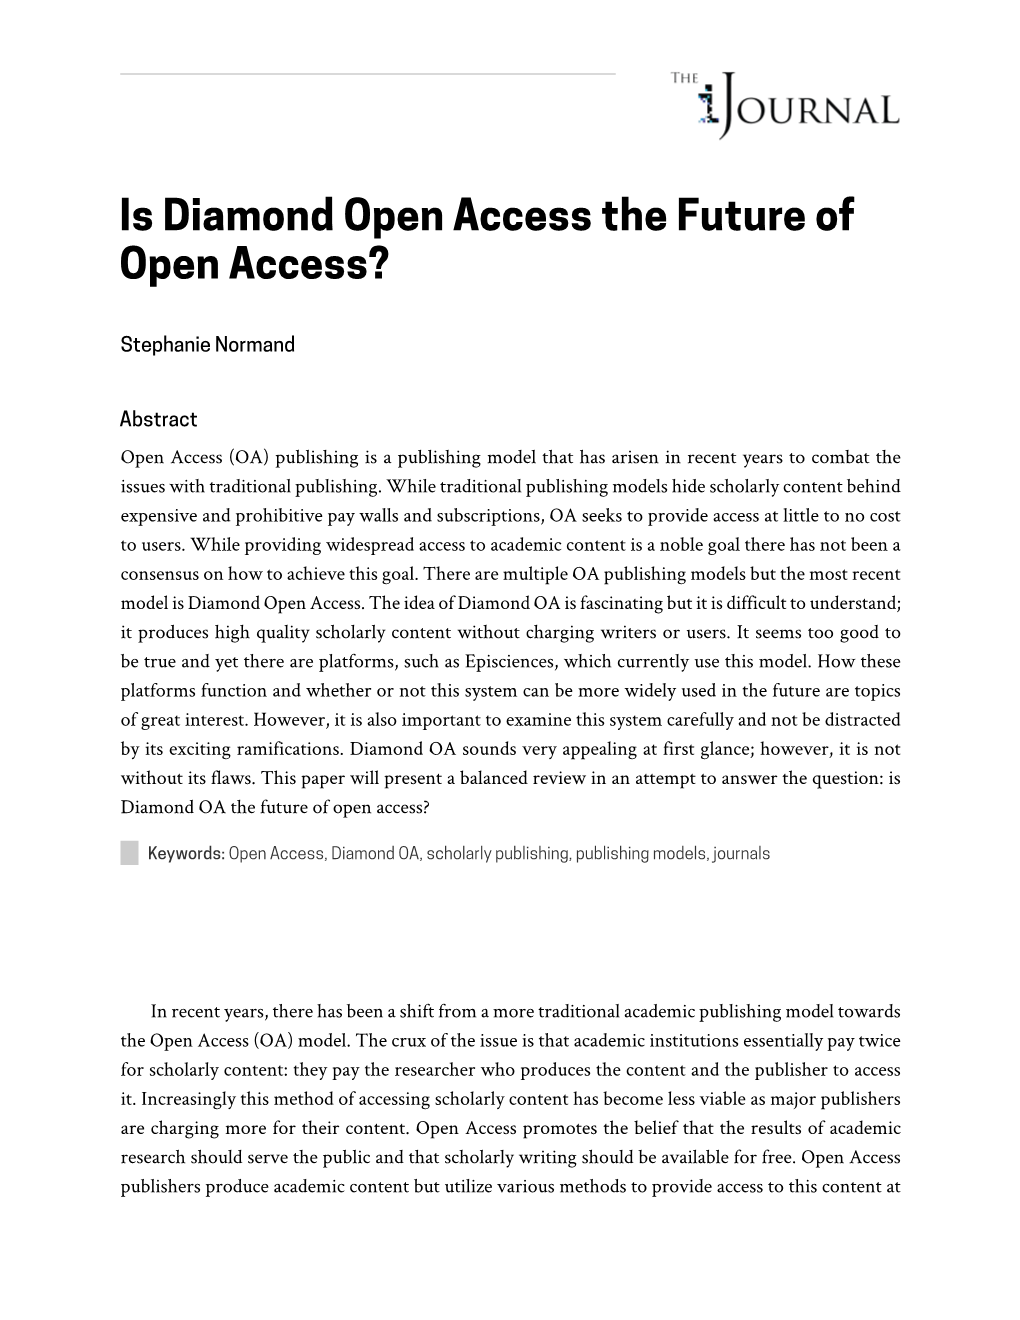 Is Diamond Open Access the Future of Open Access?